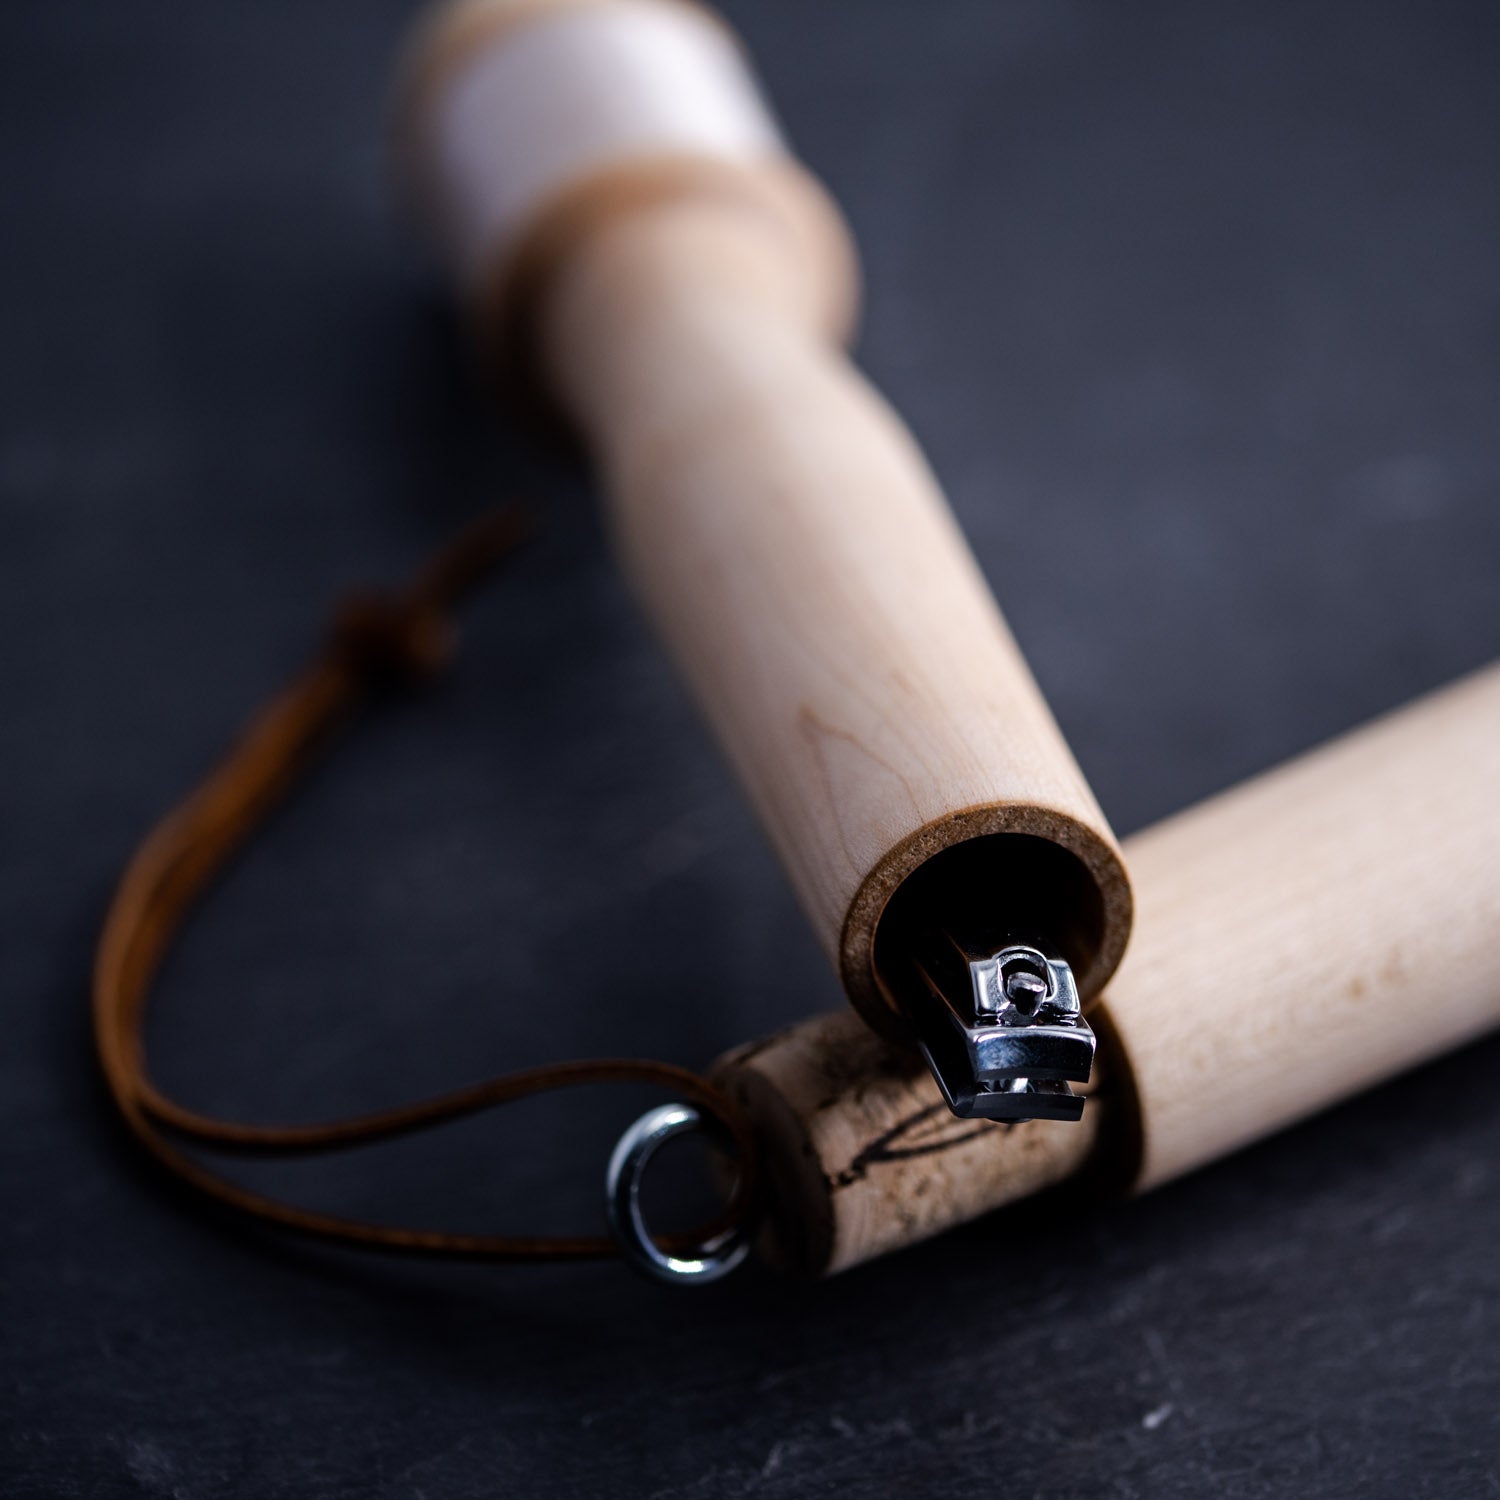 Best Portable Fishing Rod  Maple Portable Fishing Pole Kit – Daggerfish